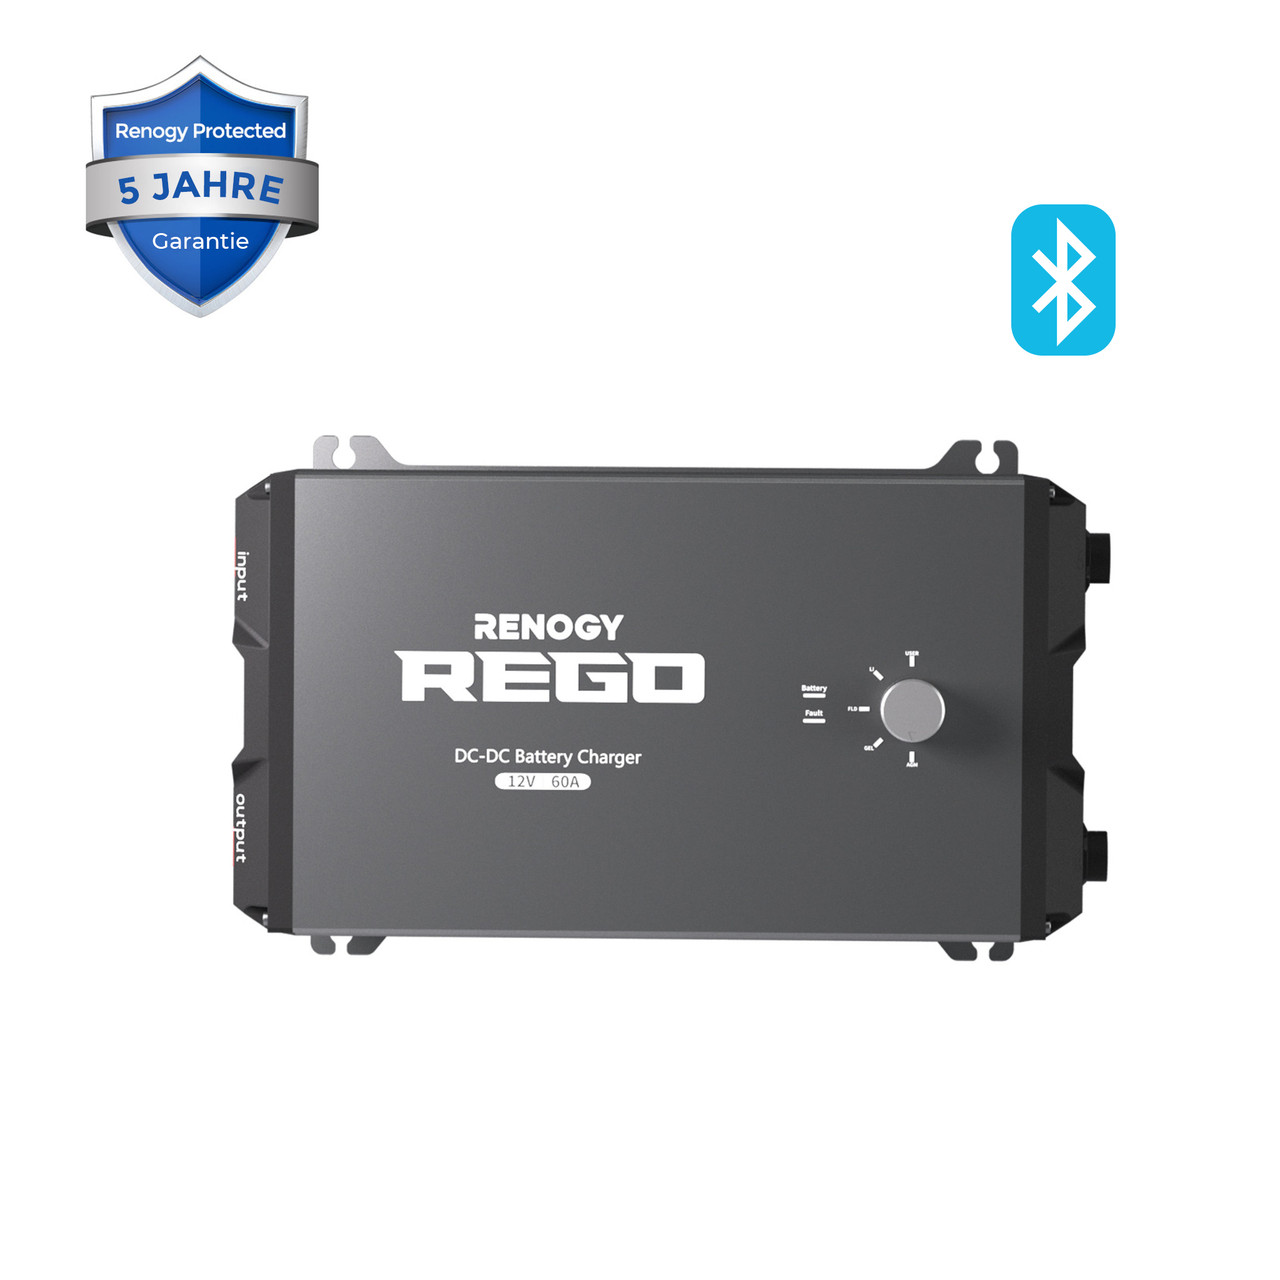 REGO 12V 60A DC-DC Batterie Ladegerät mit Bluetooth